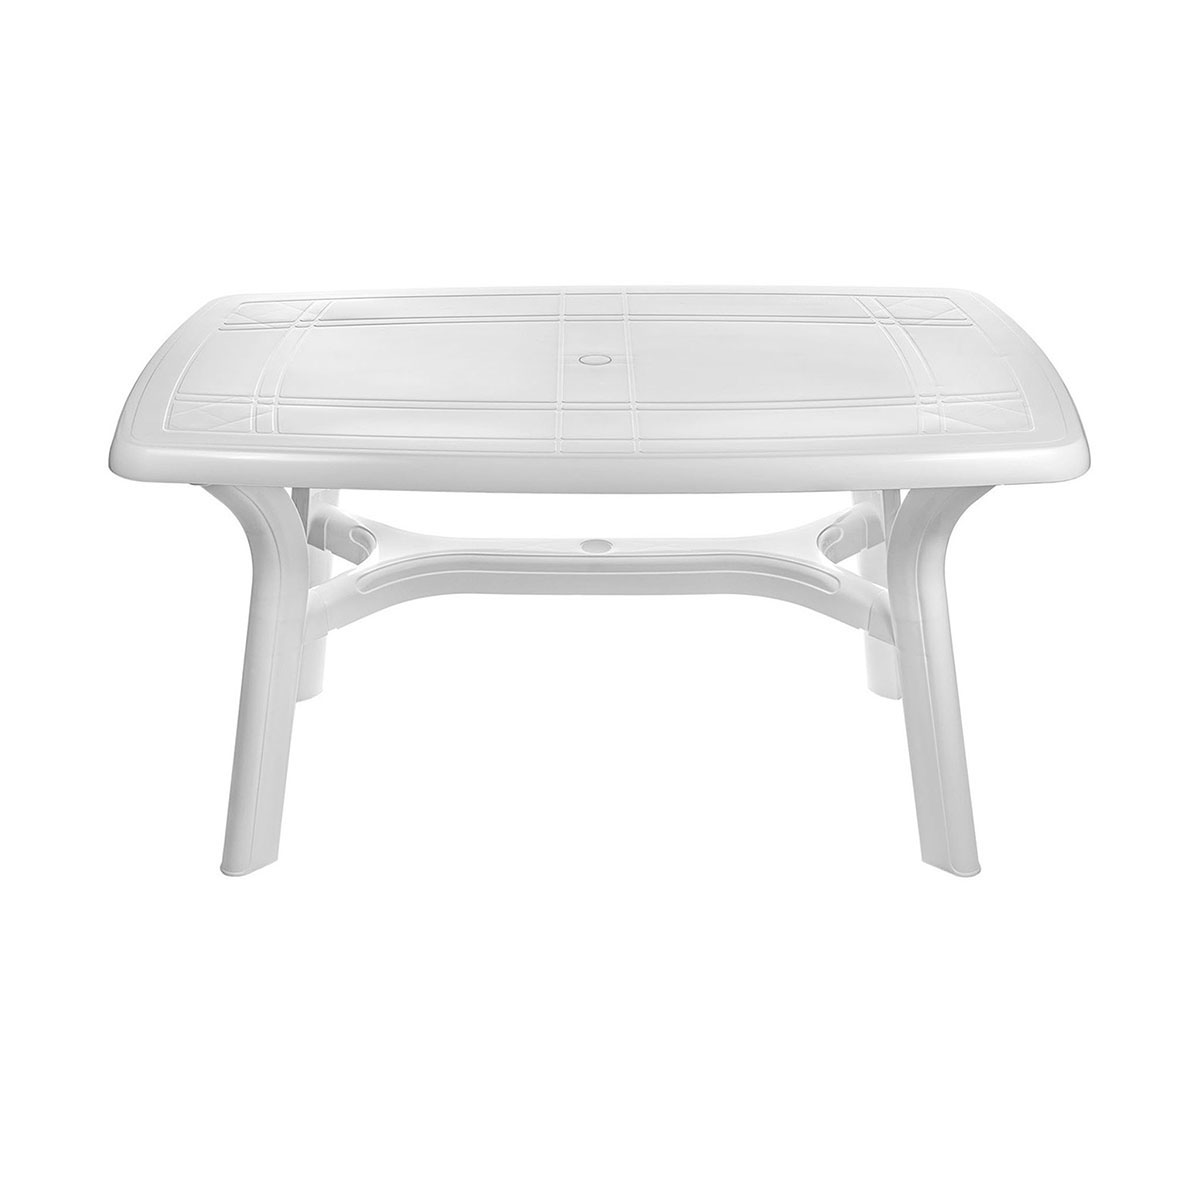 Стол для дачи обеденный Стандарт пластик Премиум 217545 белый 140х85х72,8 см